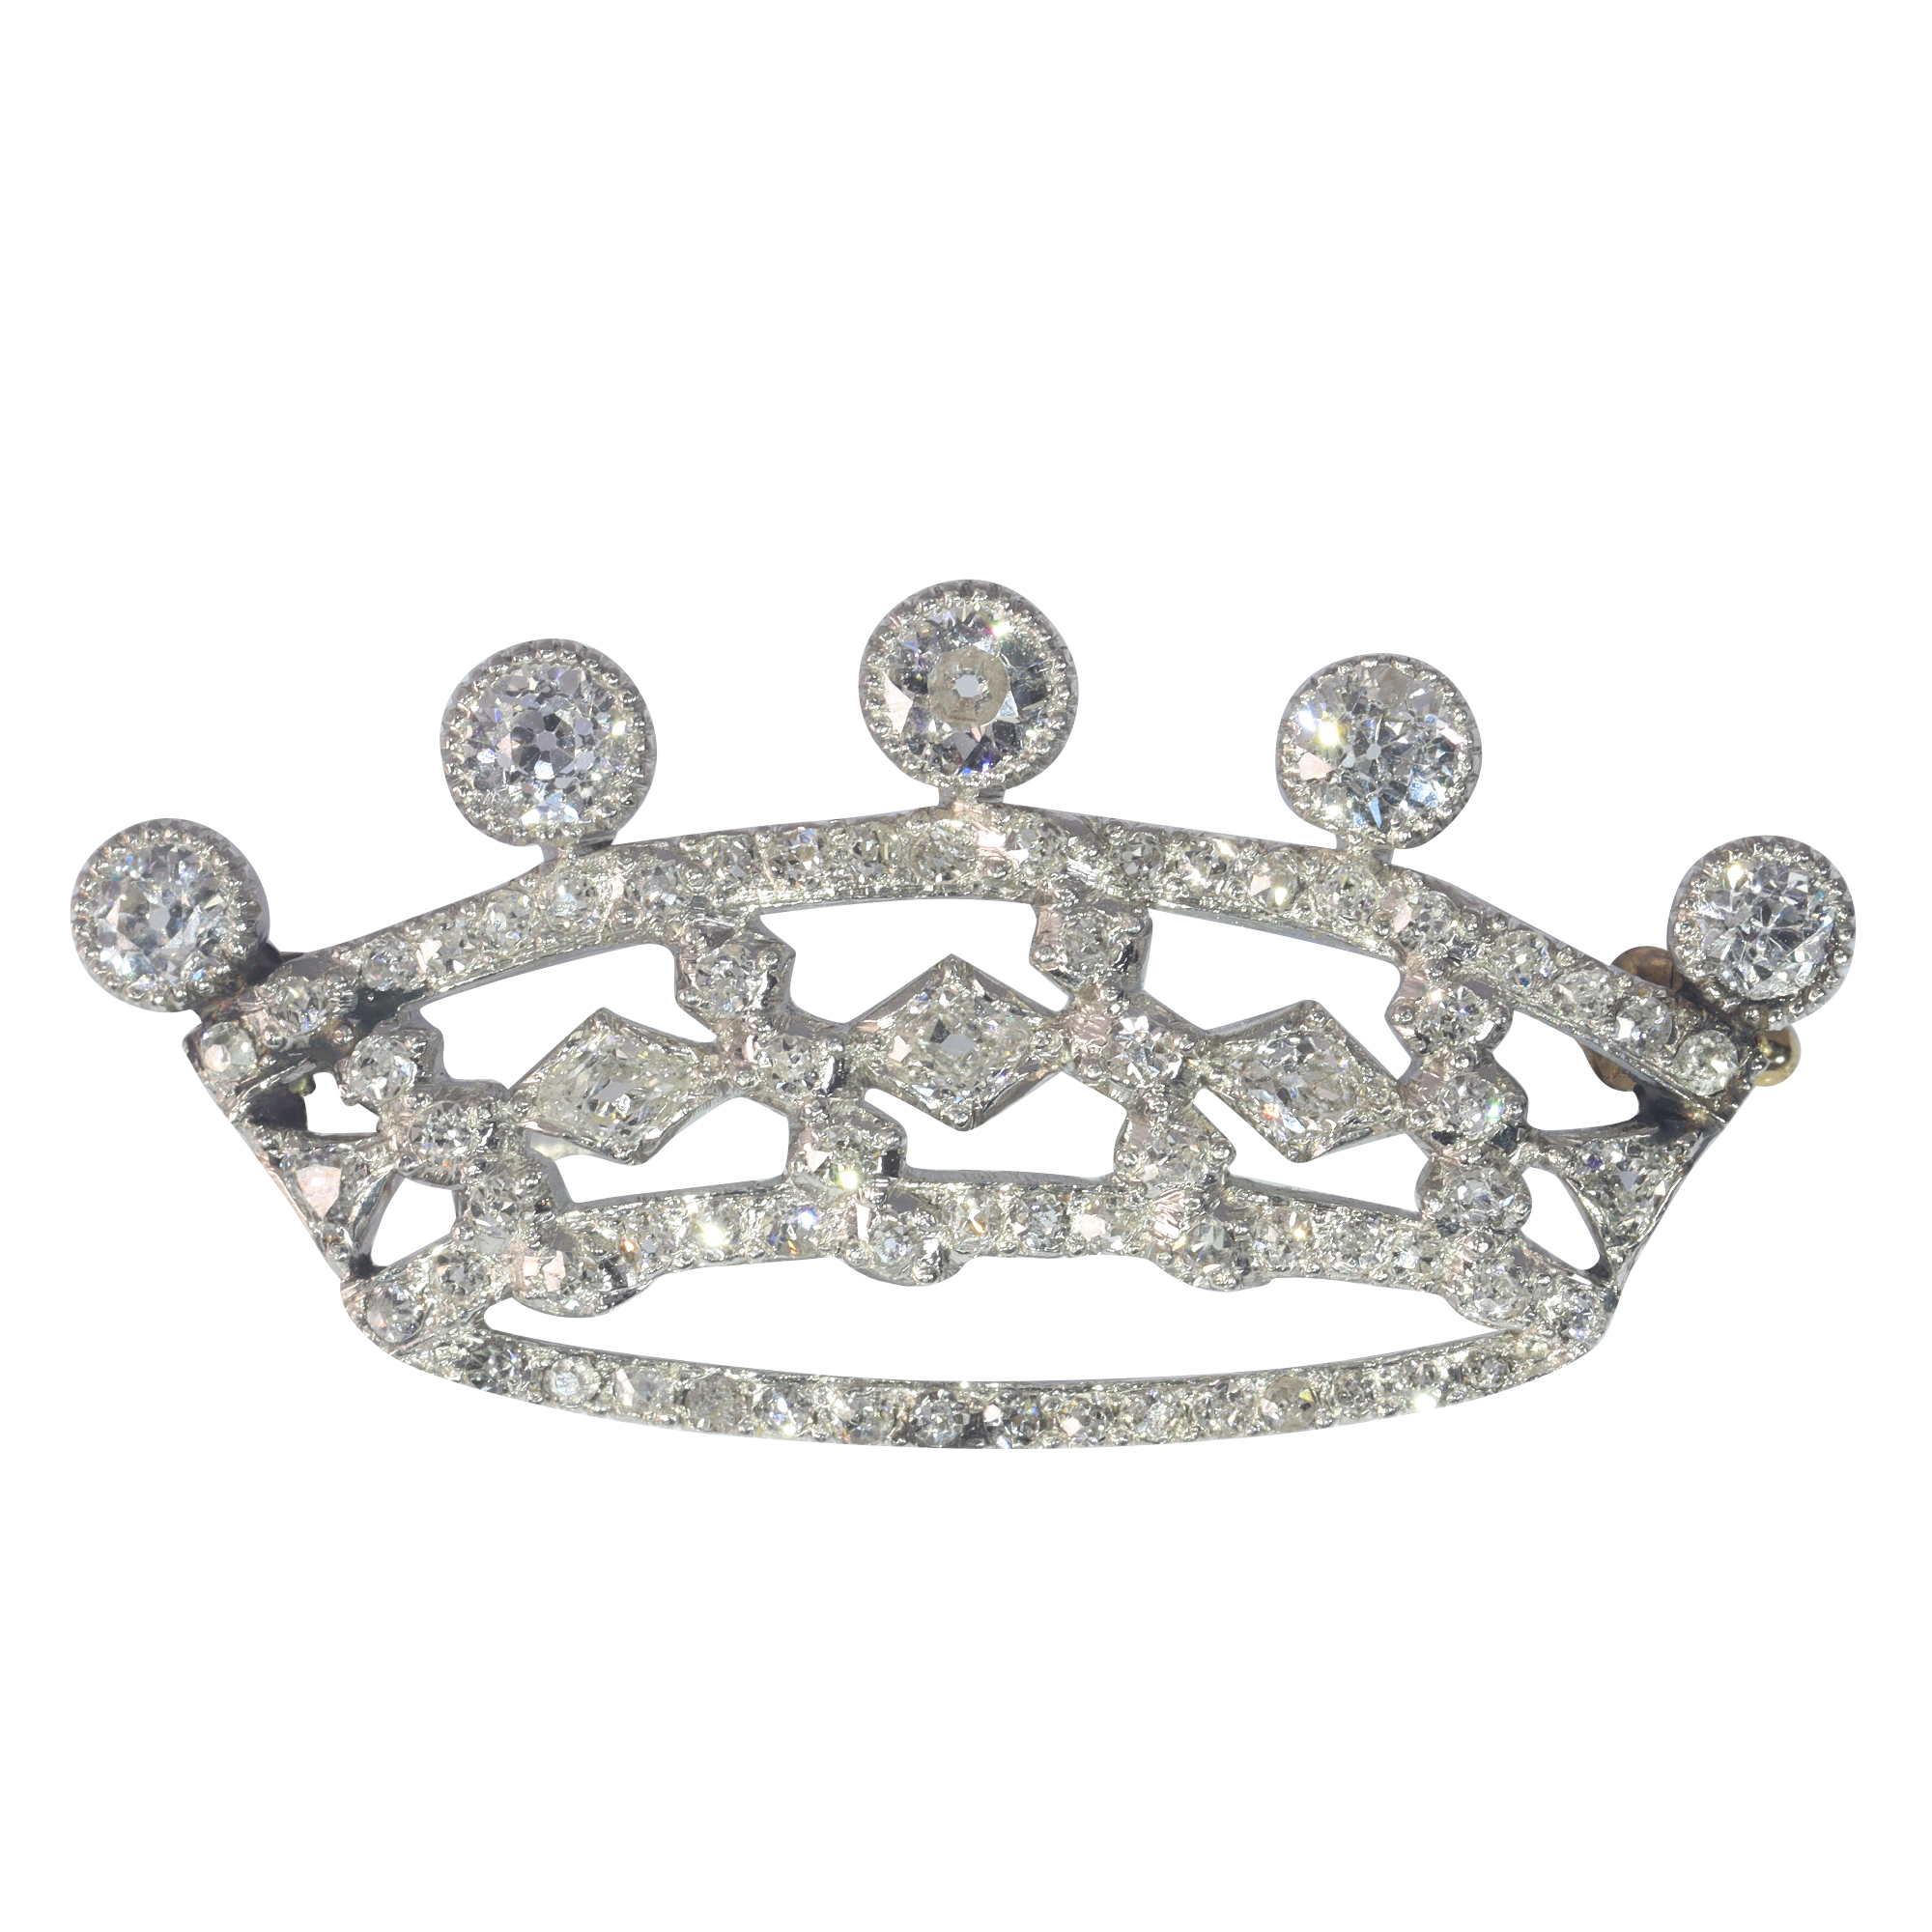 Art Deco Majesty: A Diamond Crown from the Roaring Twenties